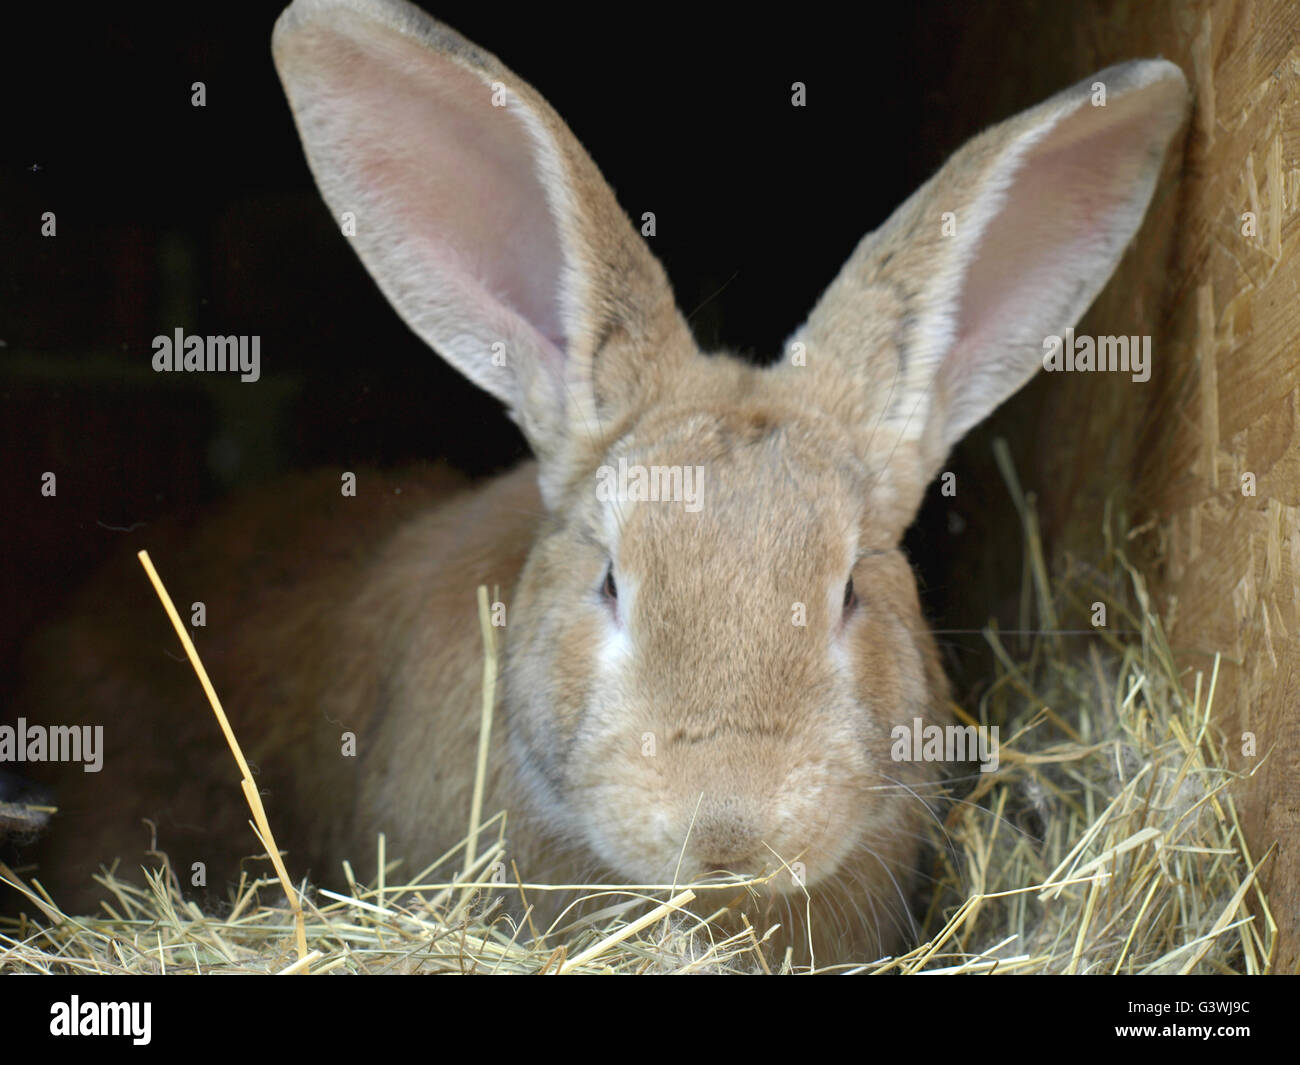 Rabbits on animal farm in rabbit-hutch Stock Photo